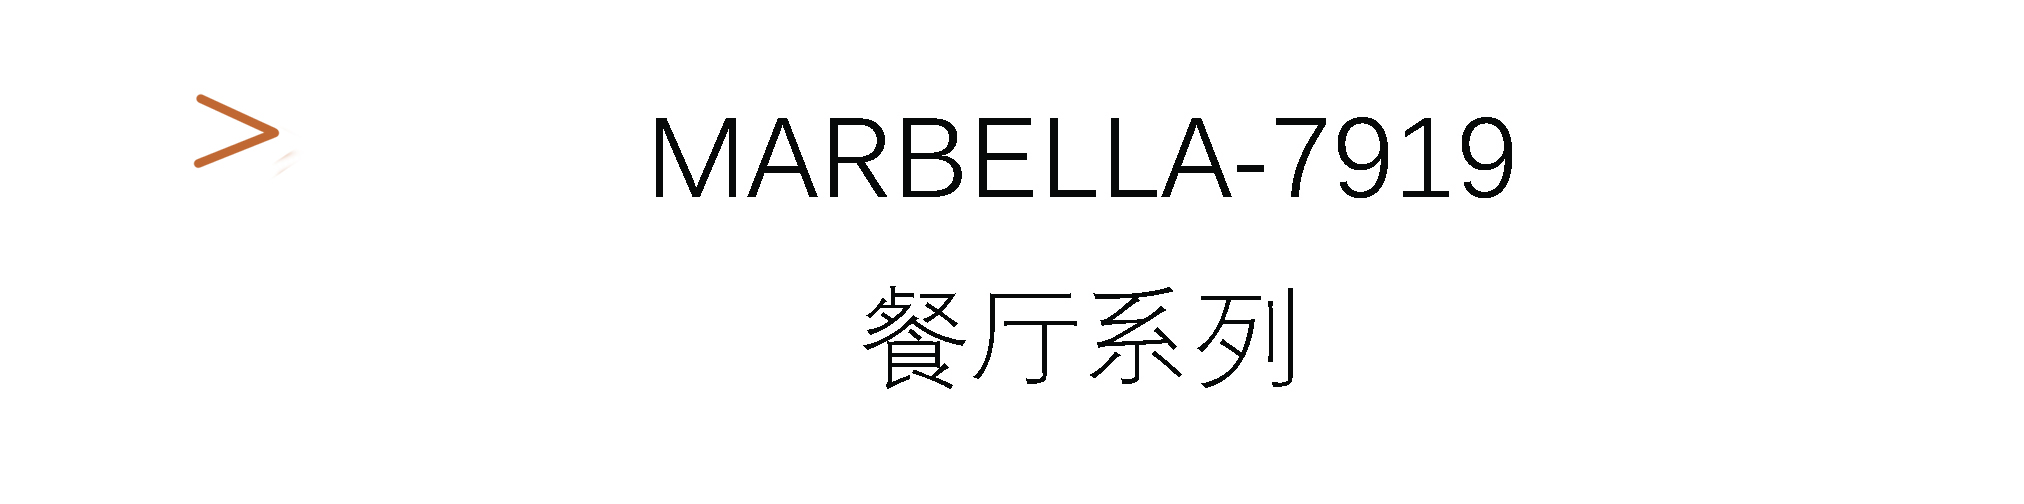 Marbella-7919